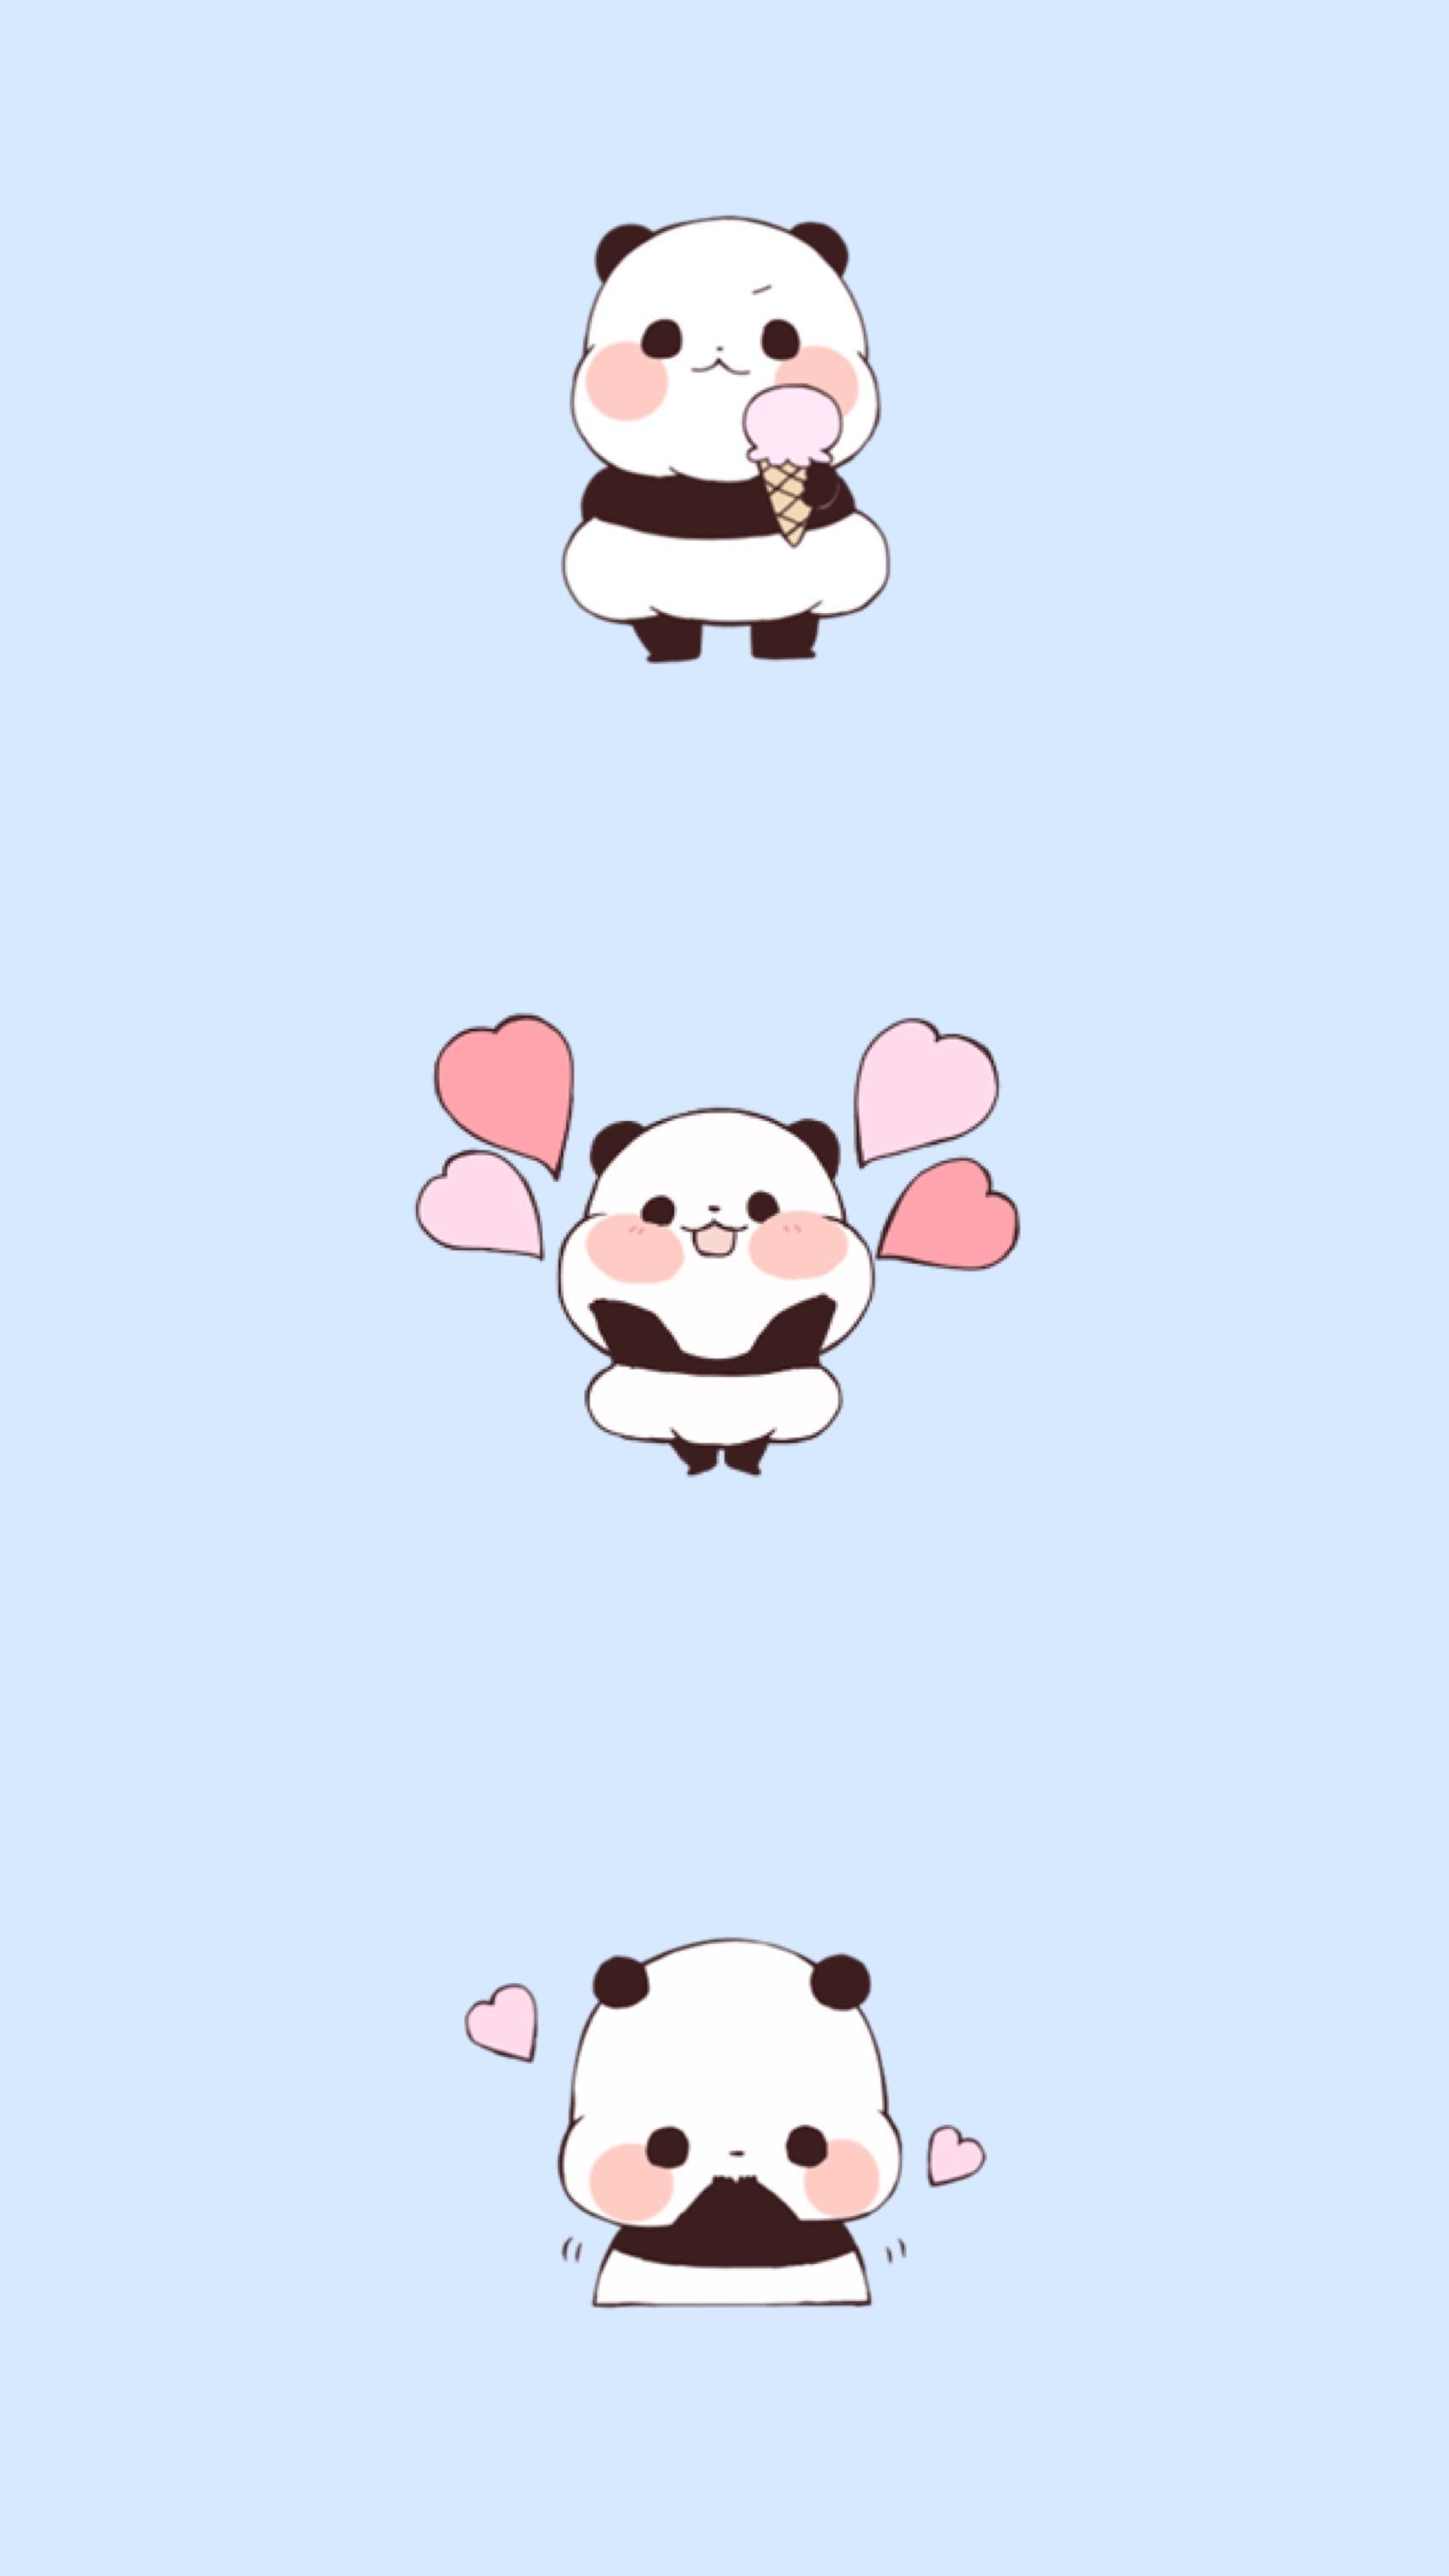 panda chibi wallpaper